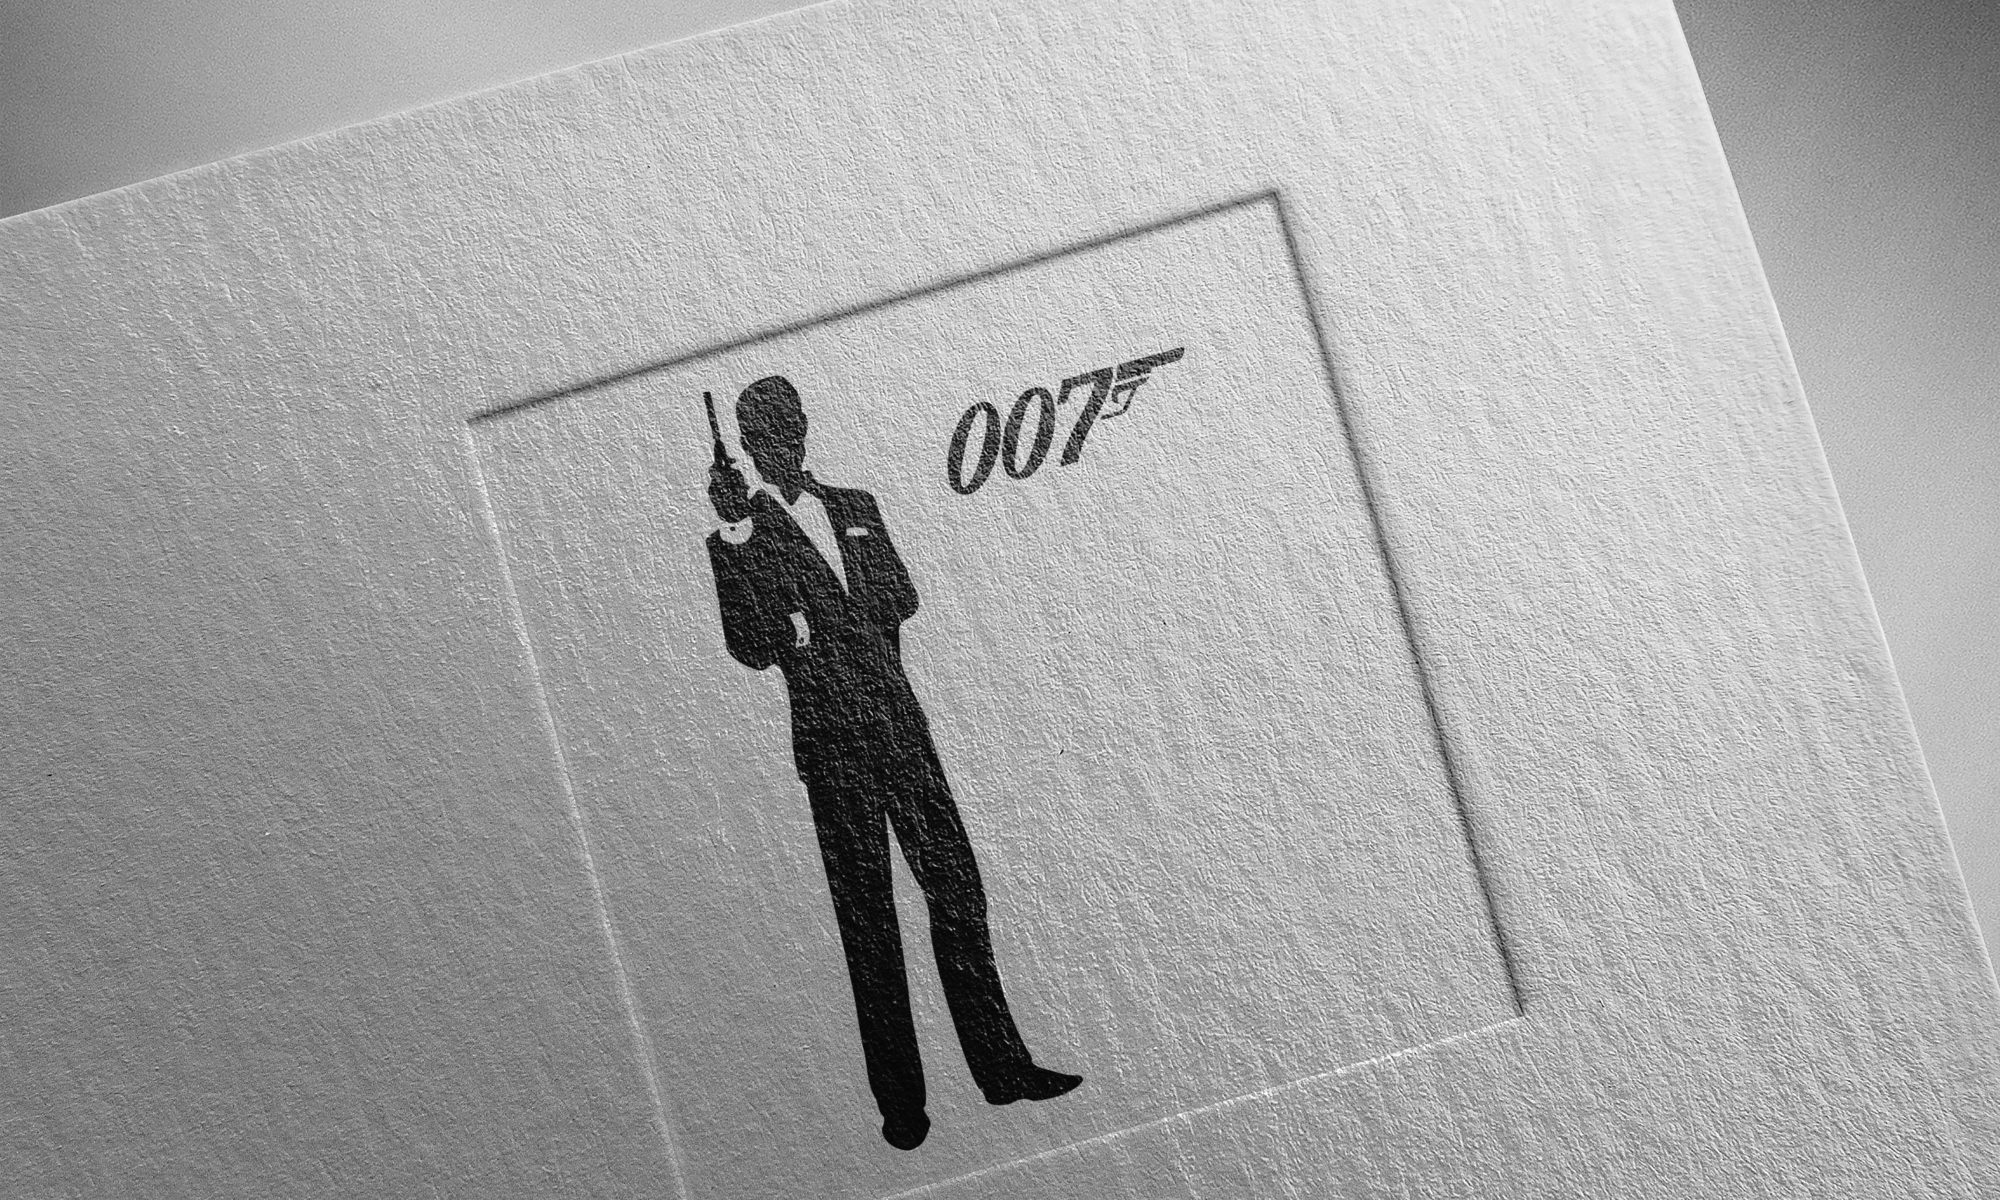 james bond 007